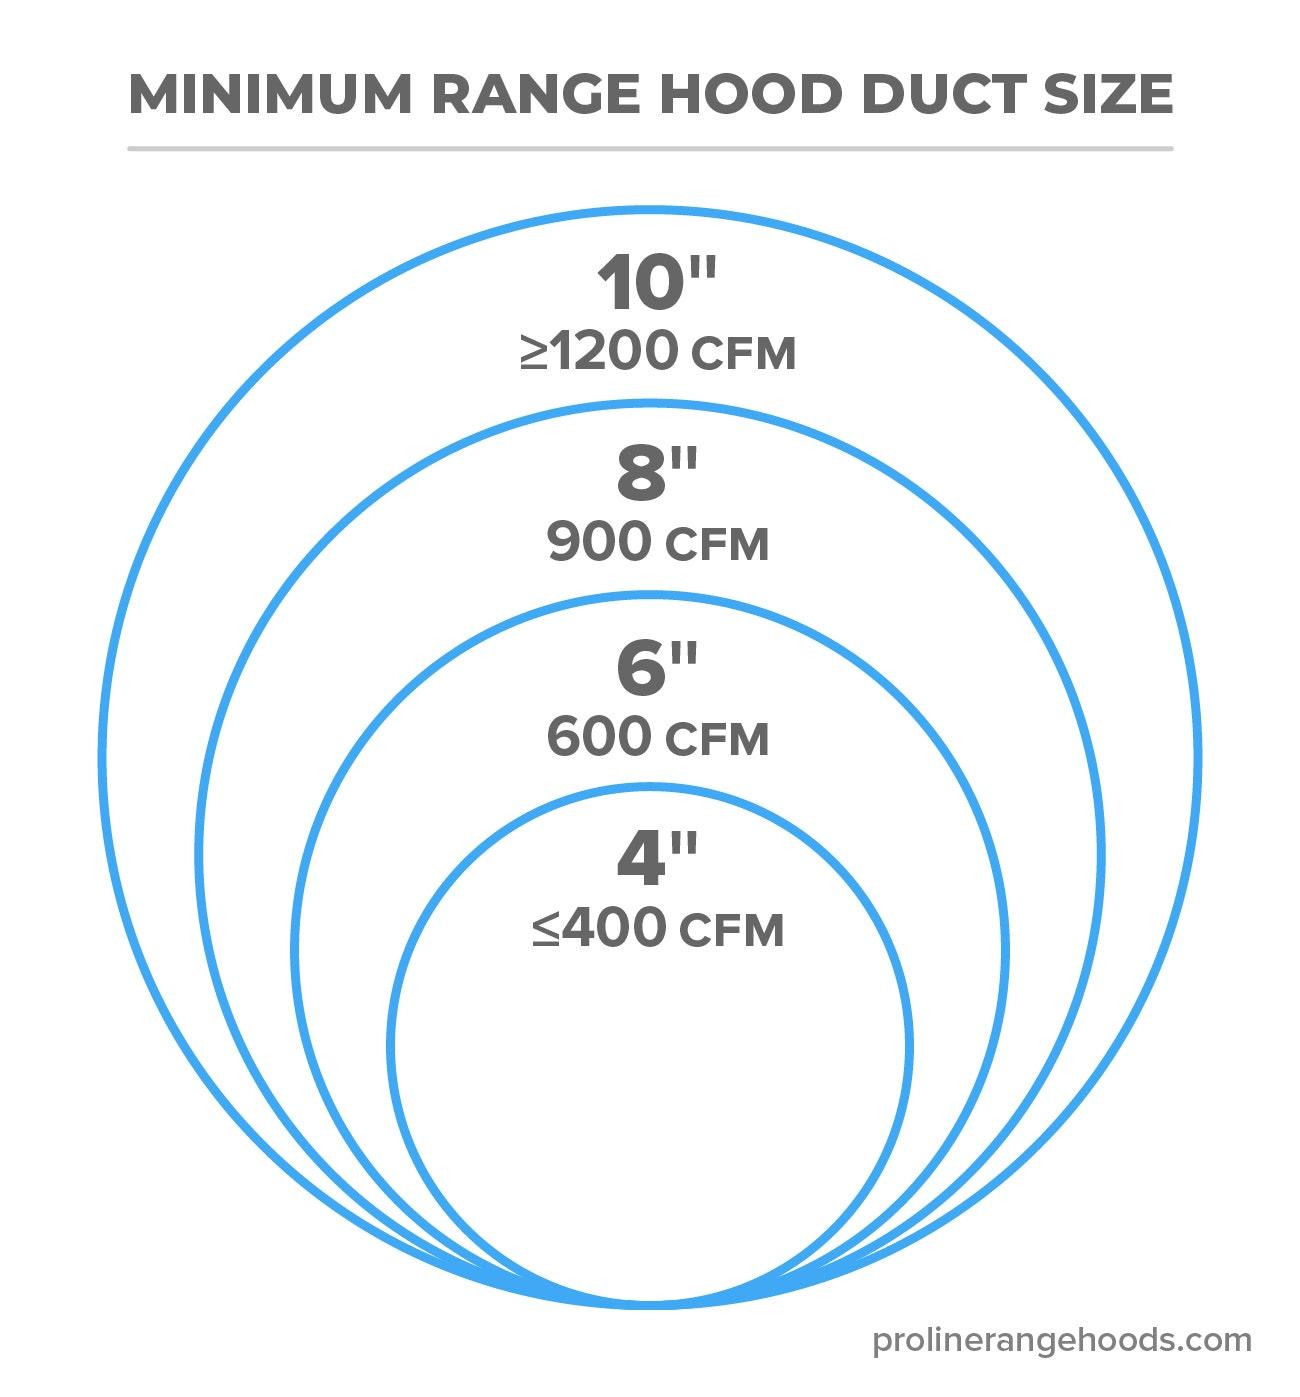 Minimum range hood duct size